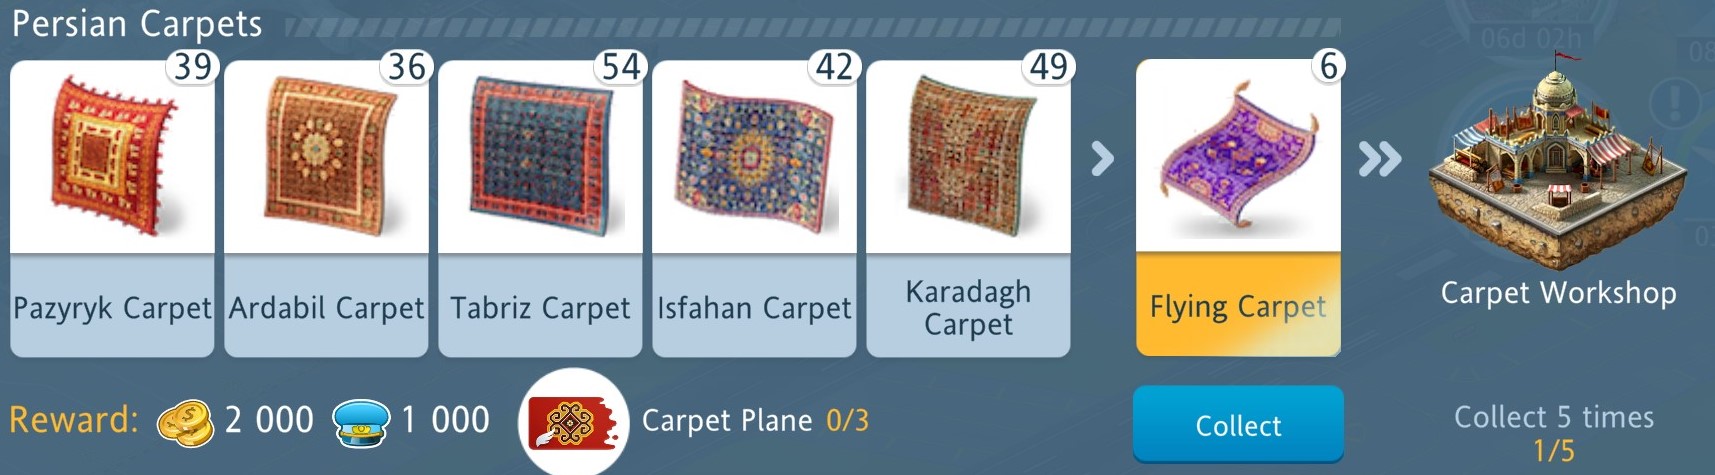 persian carpets.jpg